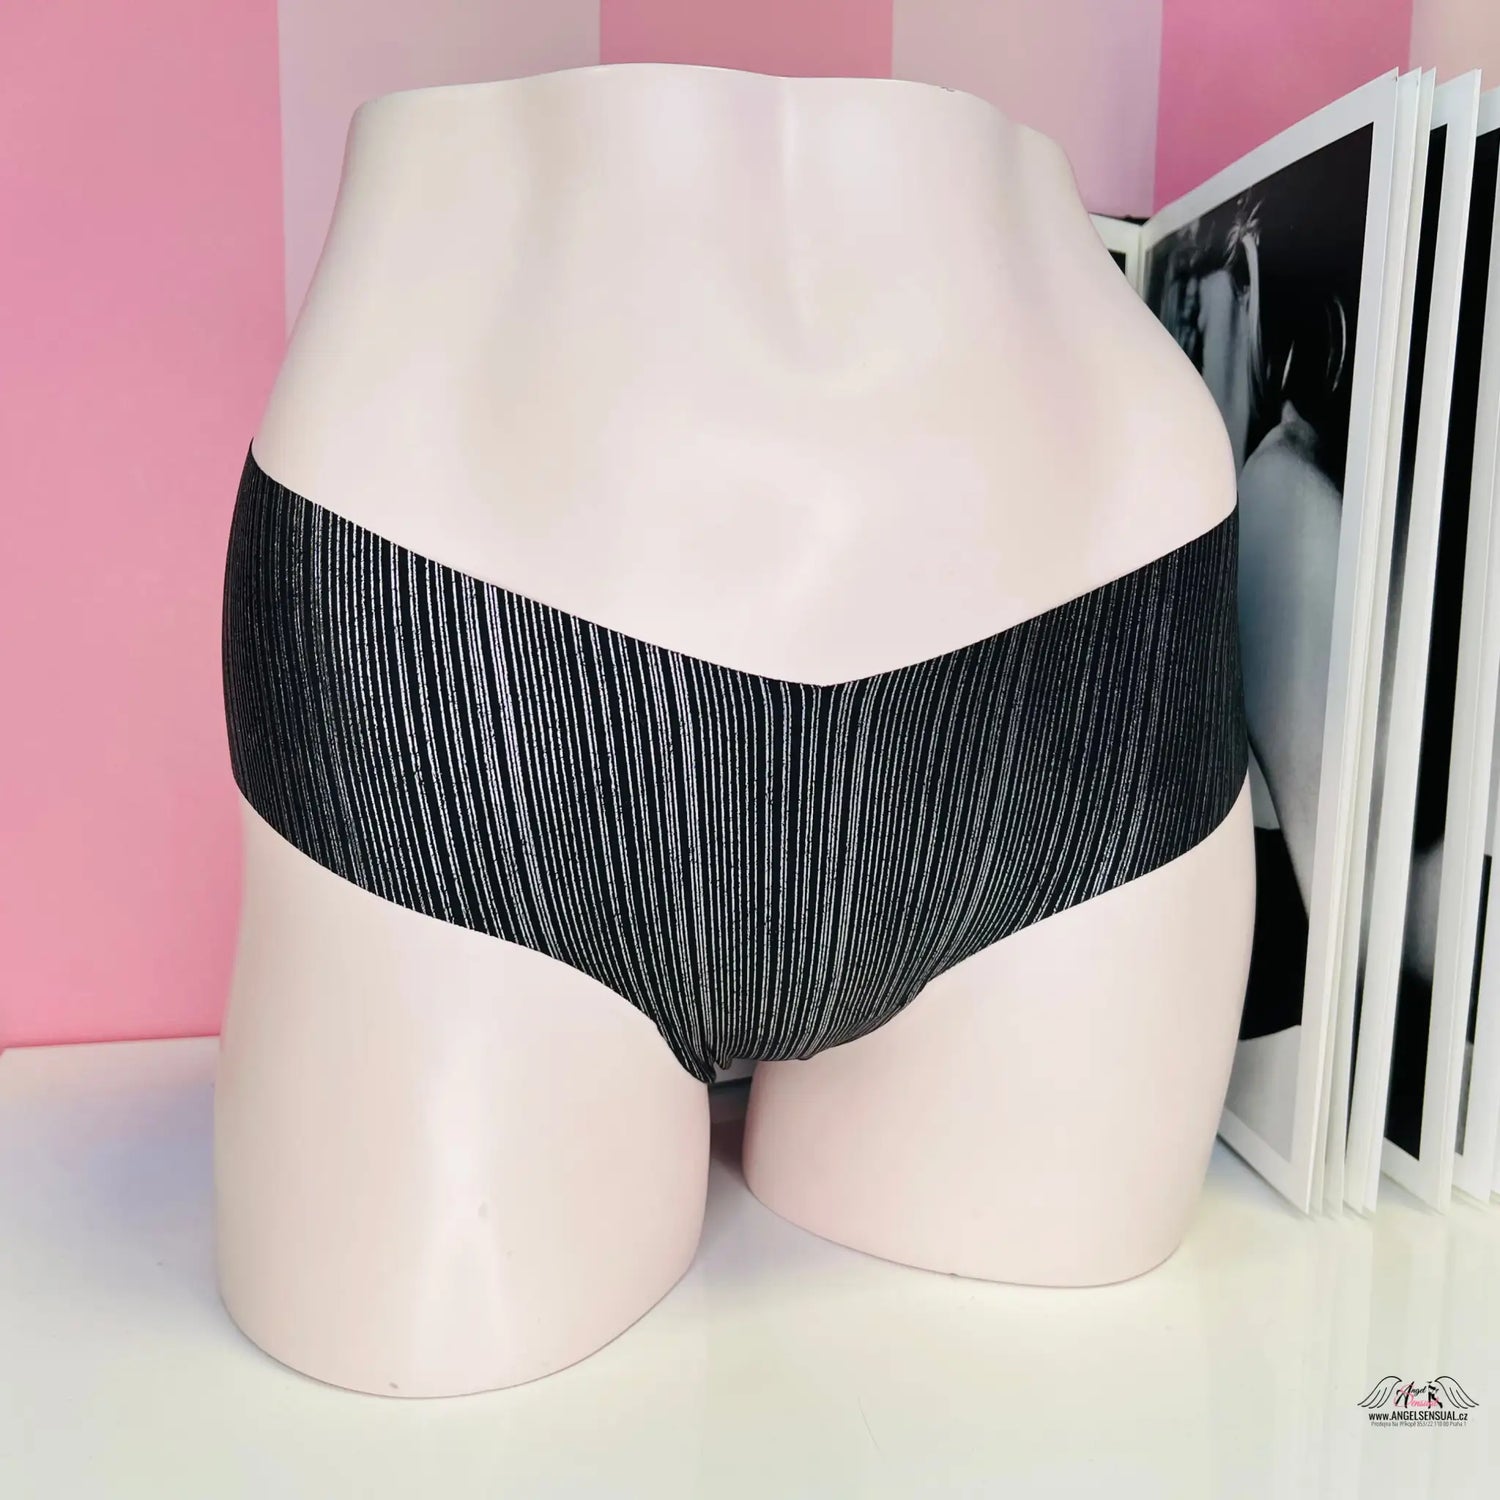 Bezešvé kalhotky - S / Černá / Nové se štítky - Cheeky Victoria’s Secret